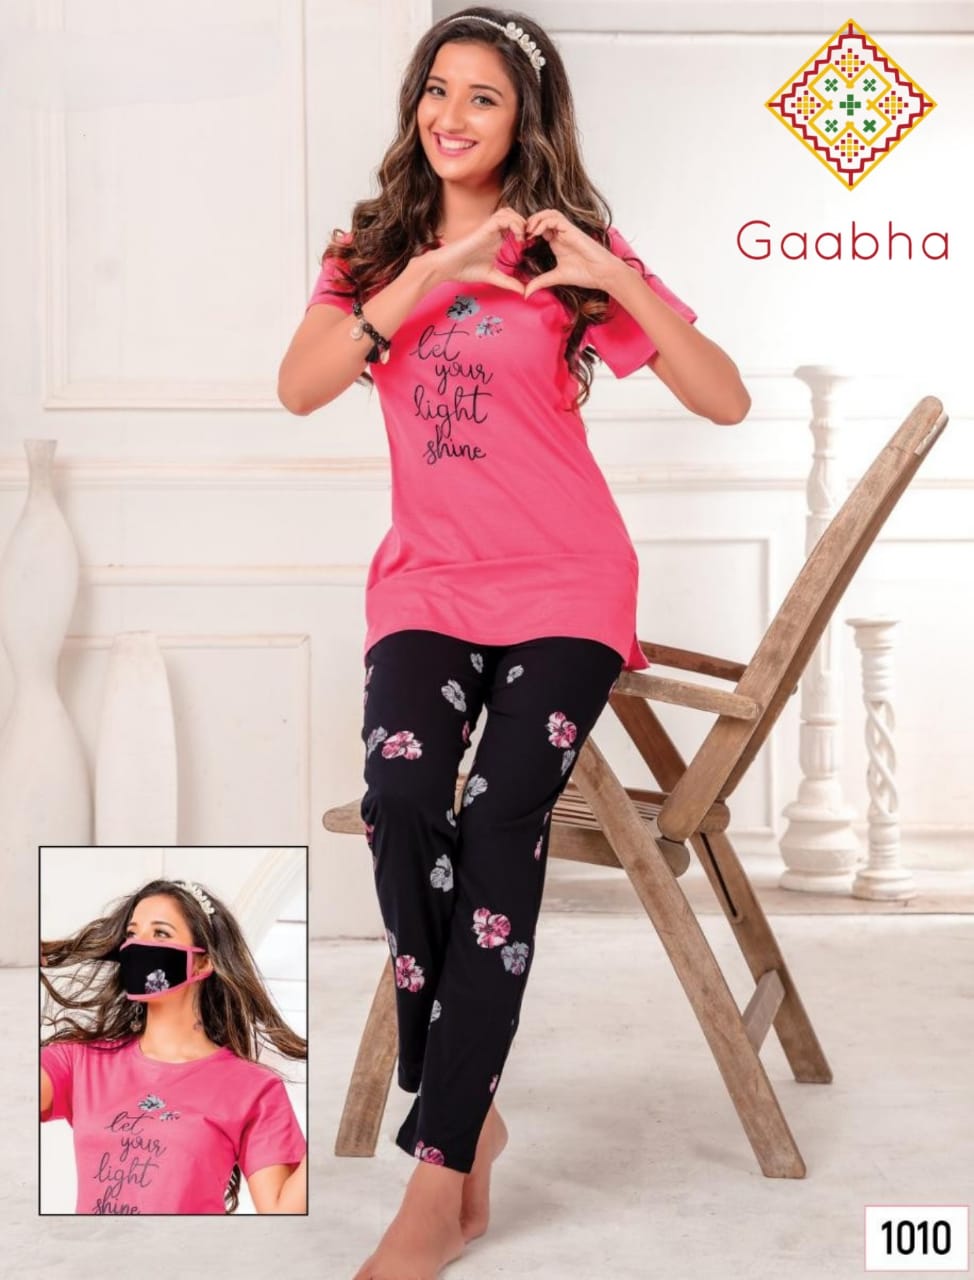 Gaabha Sweet Dreams Vol 7 Premium Lounge wear Collection